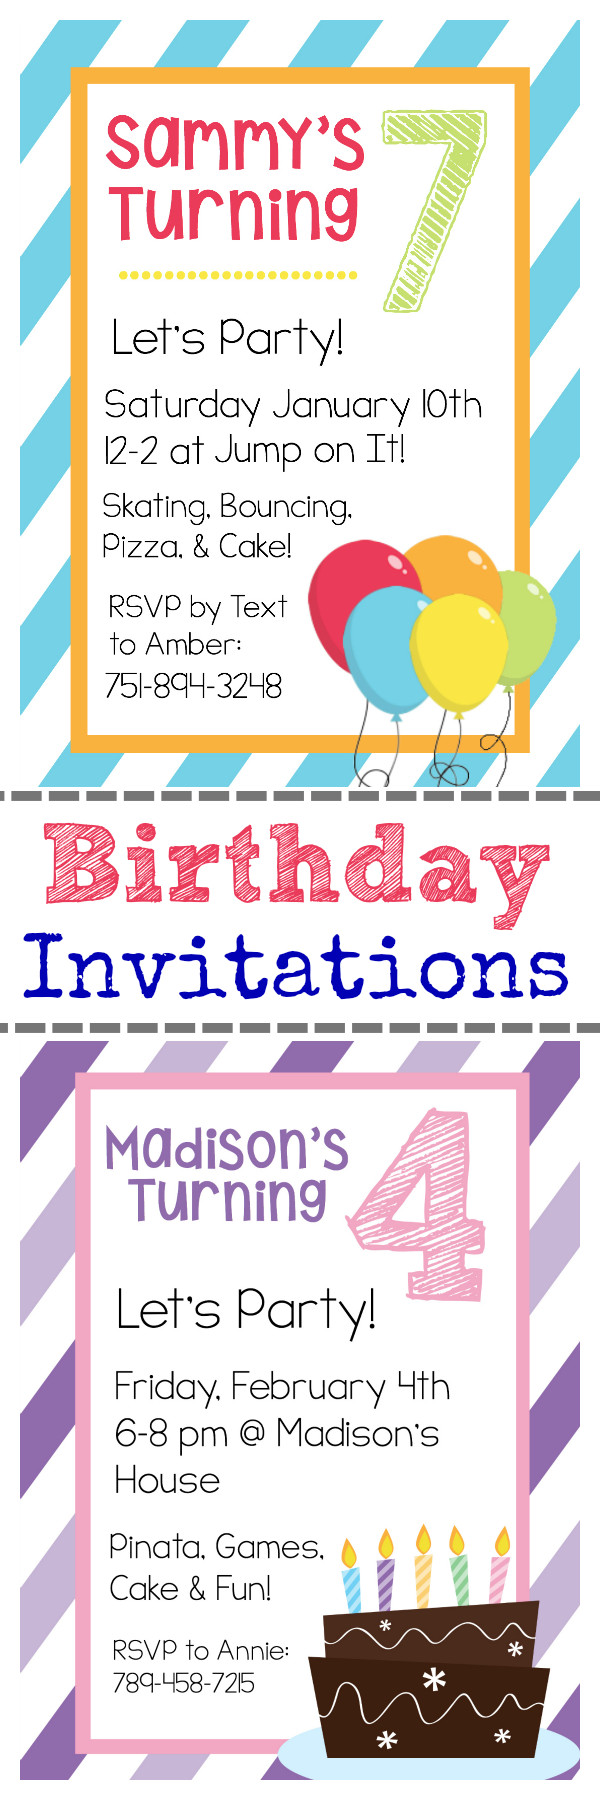 Free Printable Birthday Invitations
 Free Printable Birthday Invitation Templates